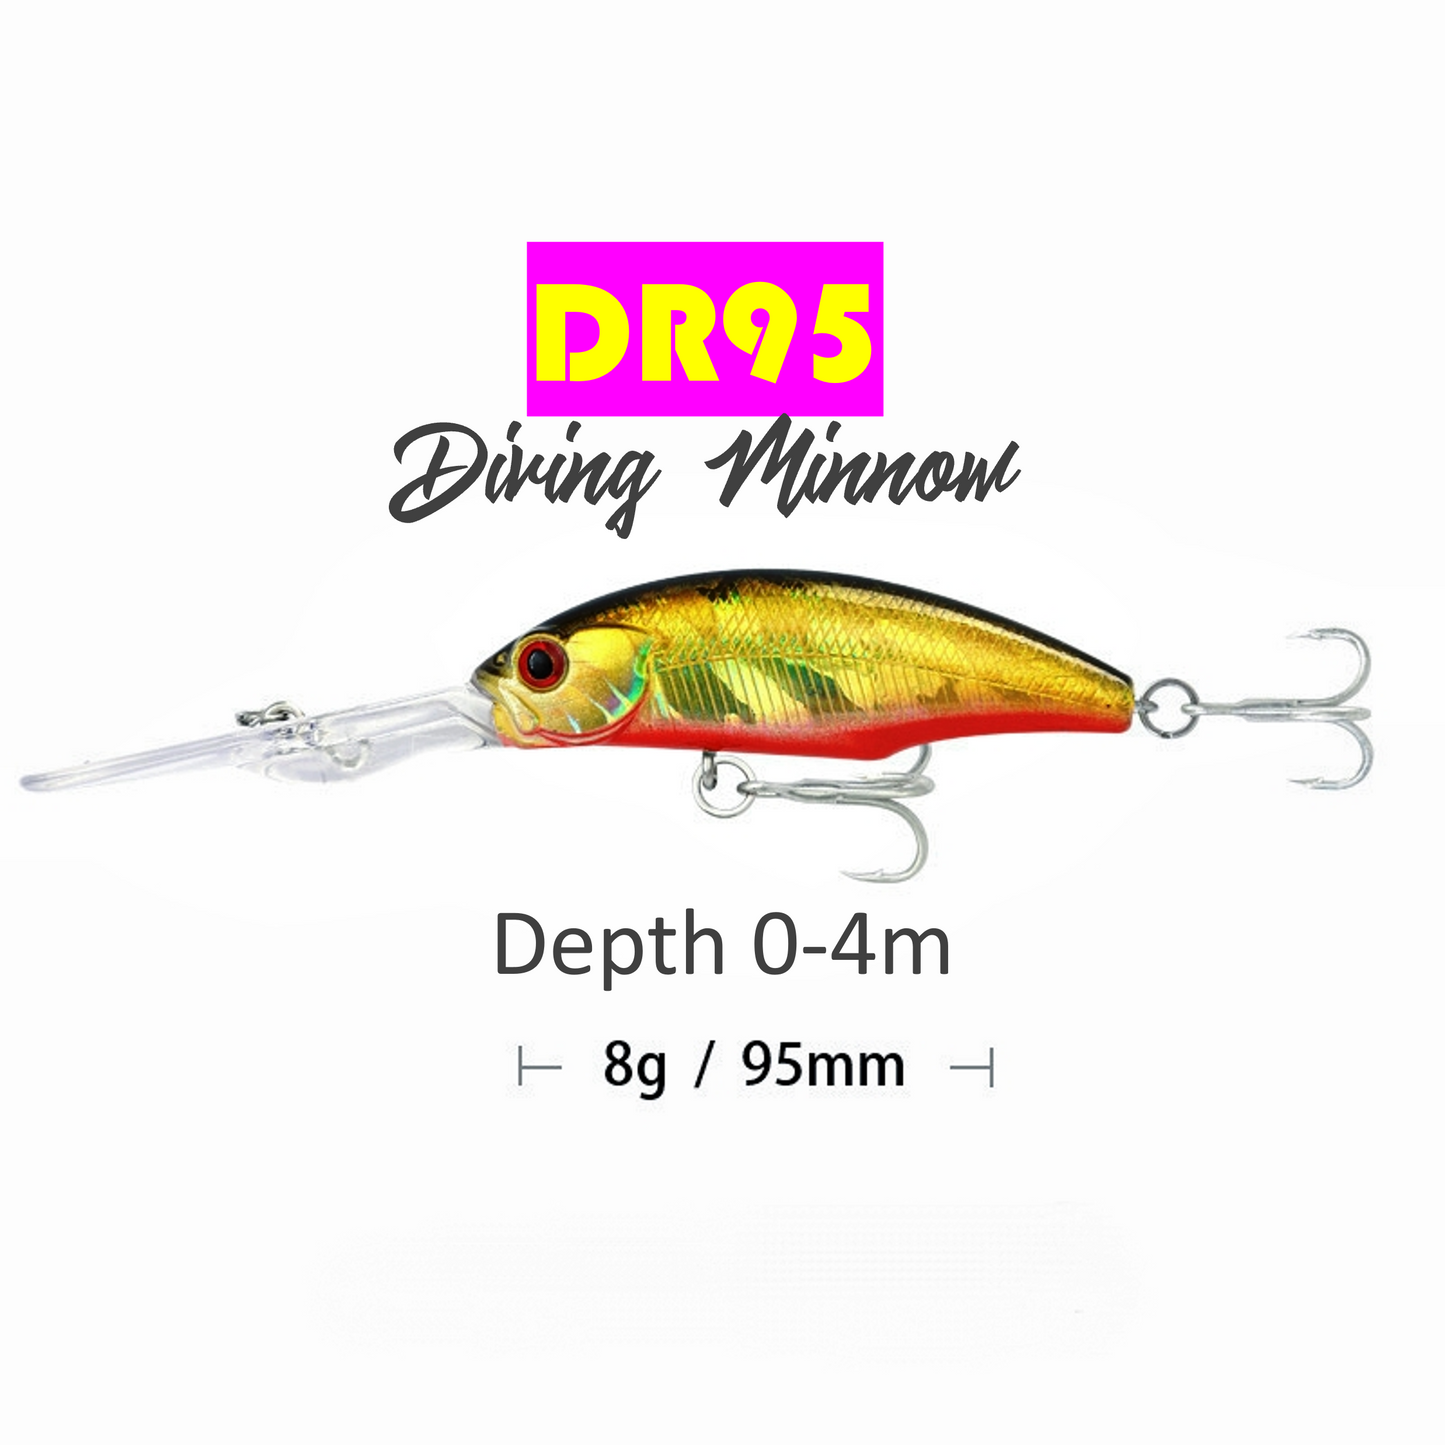 DR95 Diving Minnow